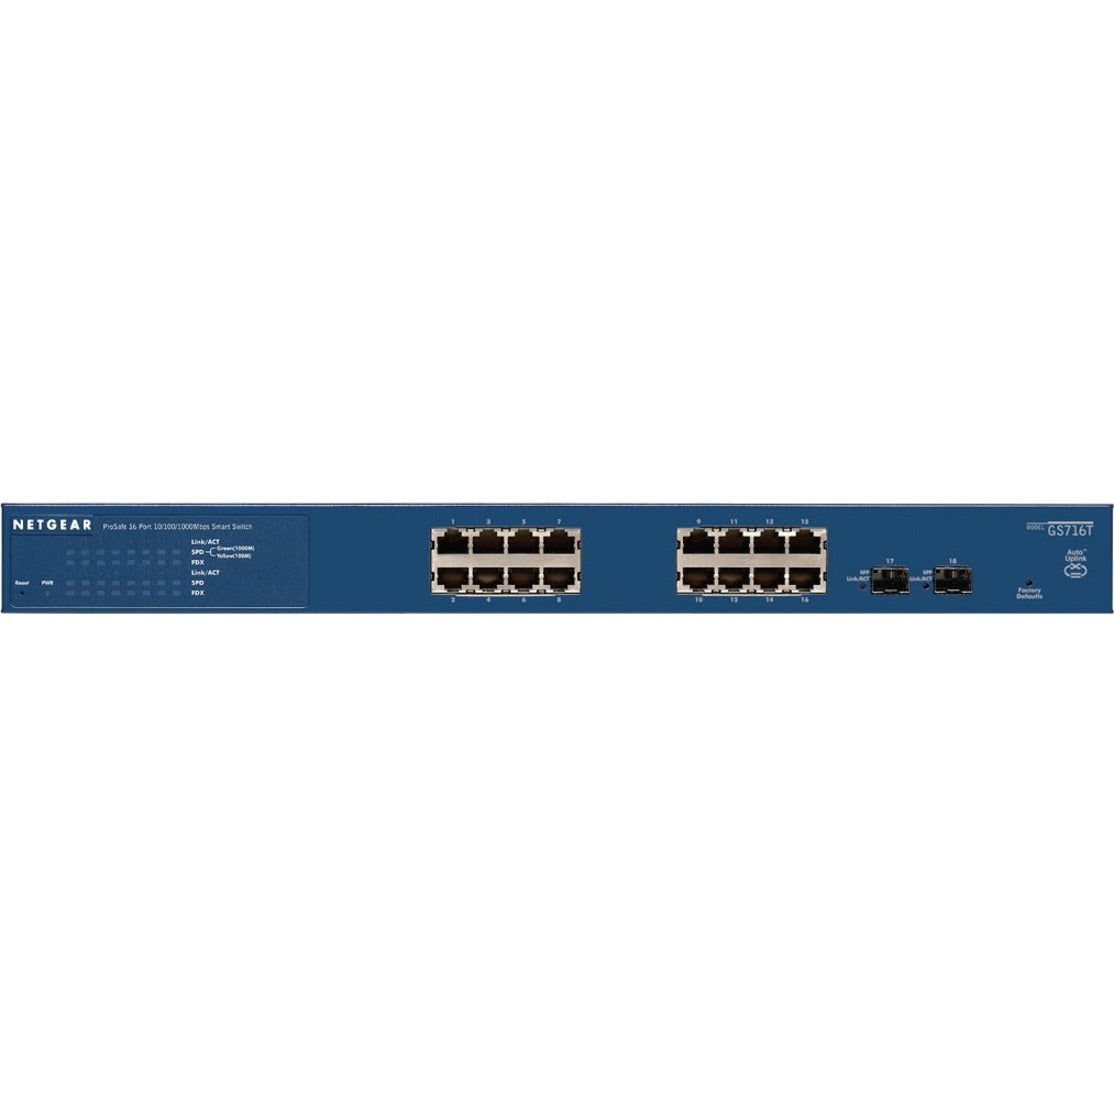 NETGEAR 16-Port Smart Managed Pro Switch, GS716T (GS716T-300NAS)